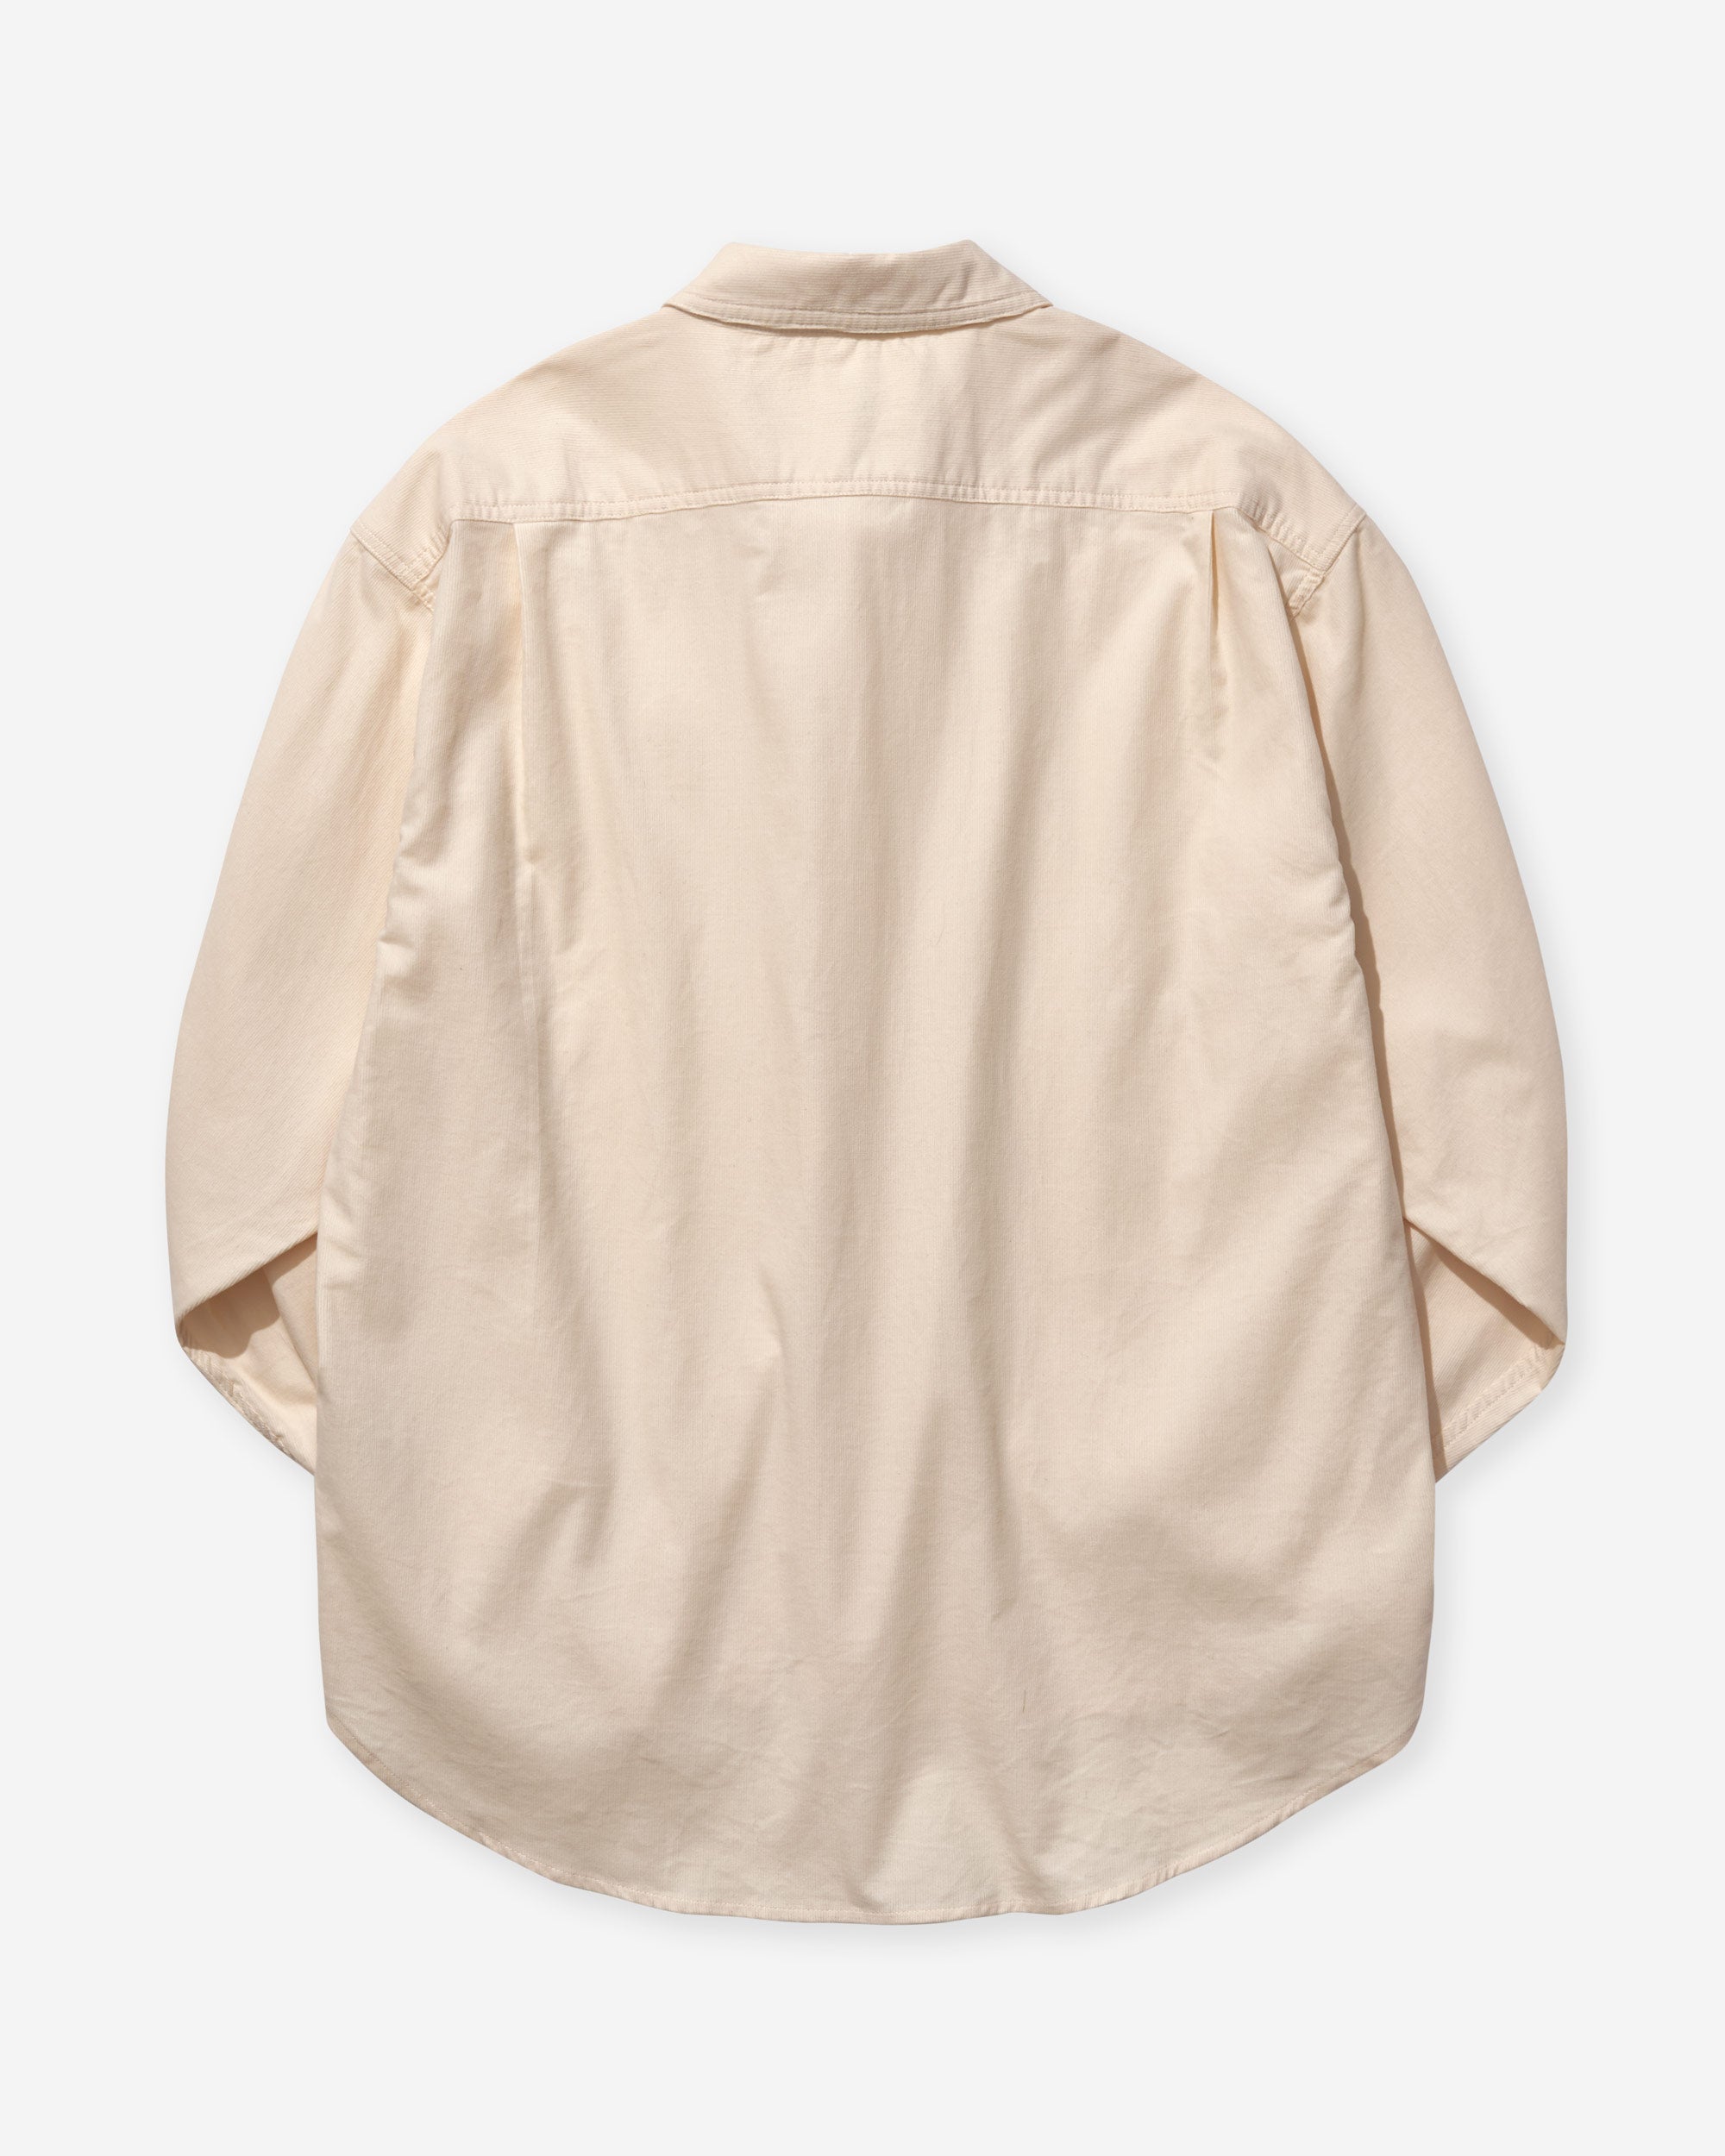 Atom Cord Shirt - Ivory